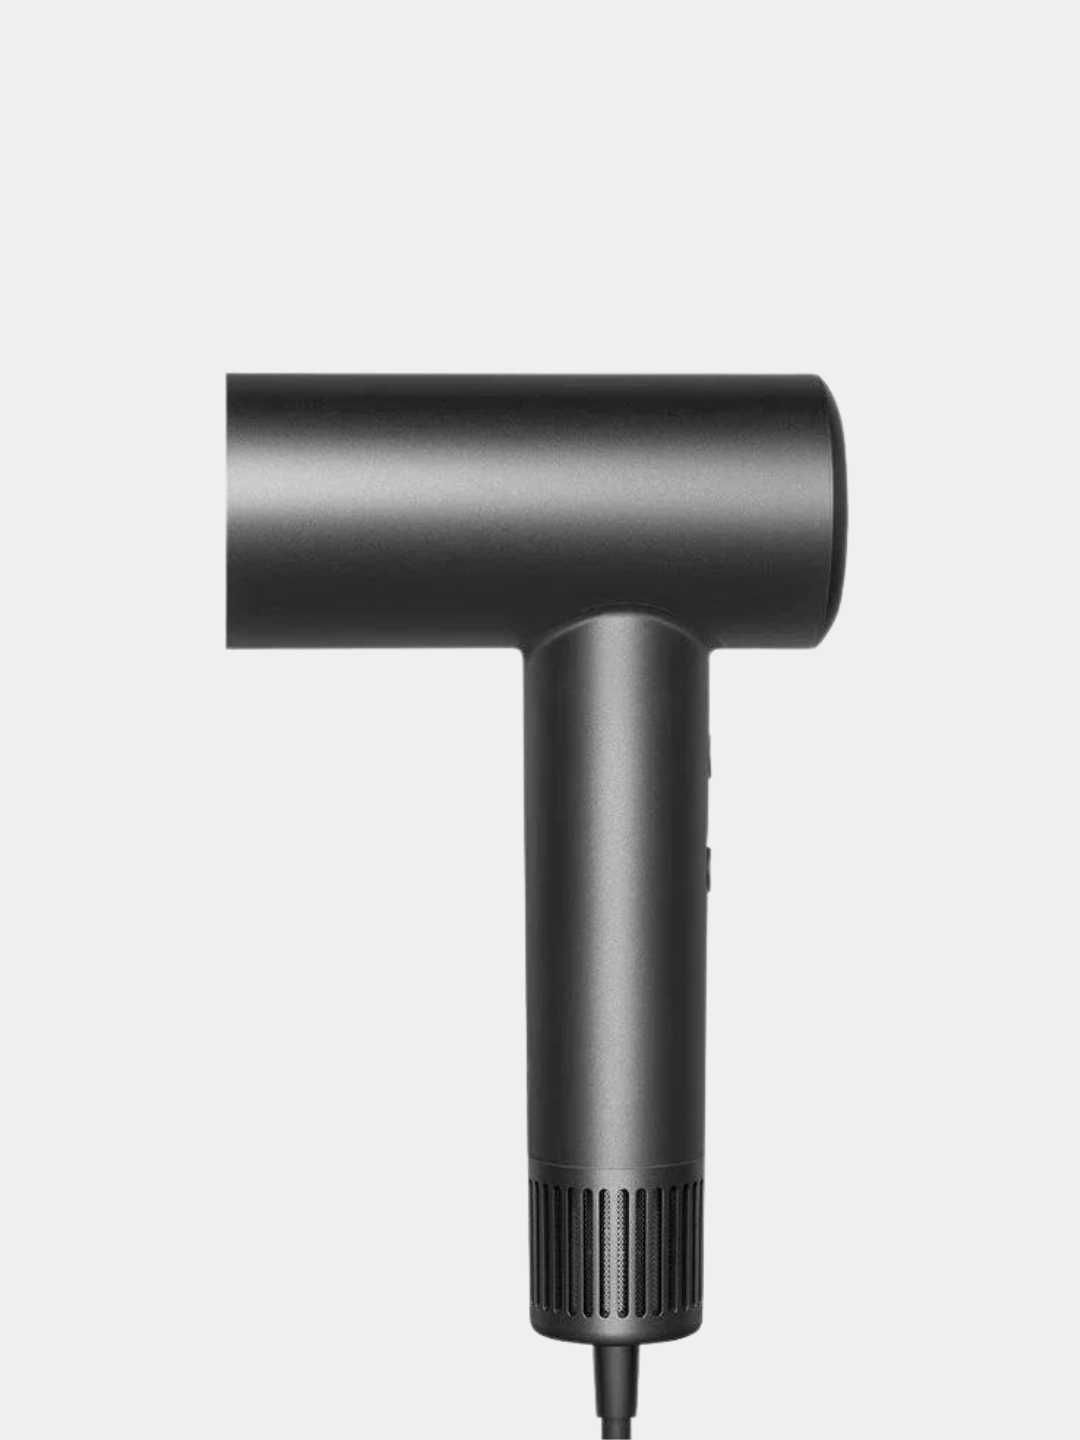 Фен для волос Xiaomi Mijia H700